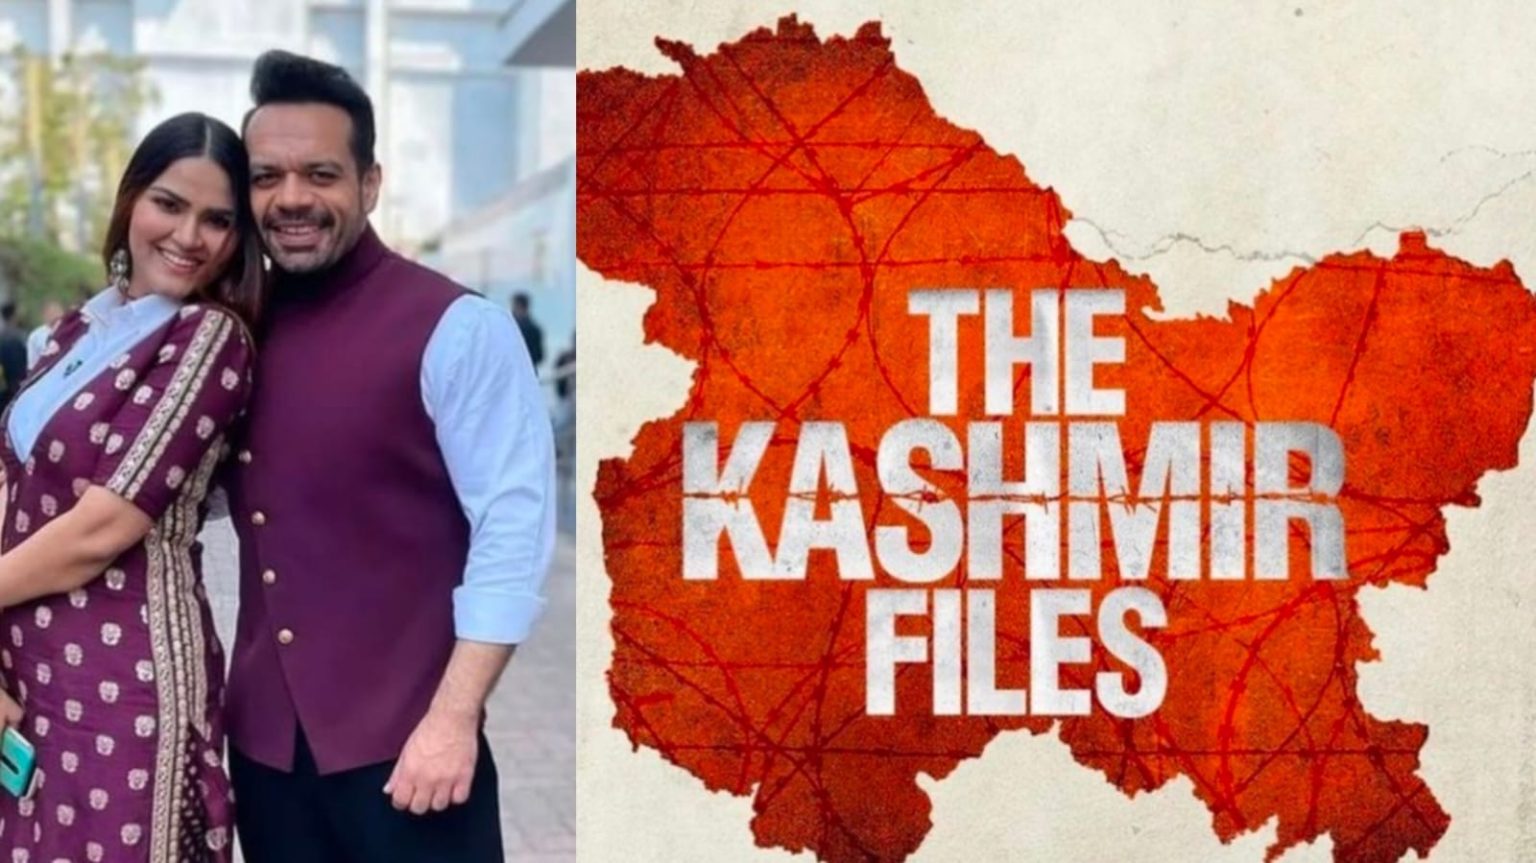 Youtuber Flying Beast will showThe Kashmir Files